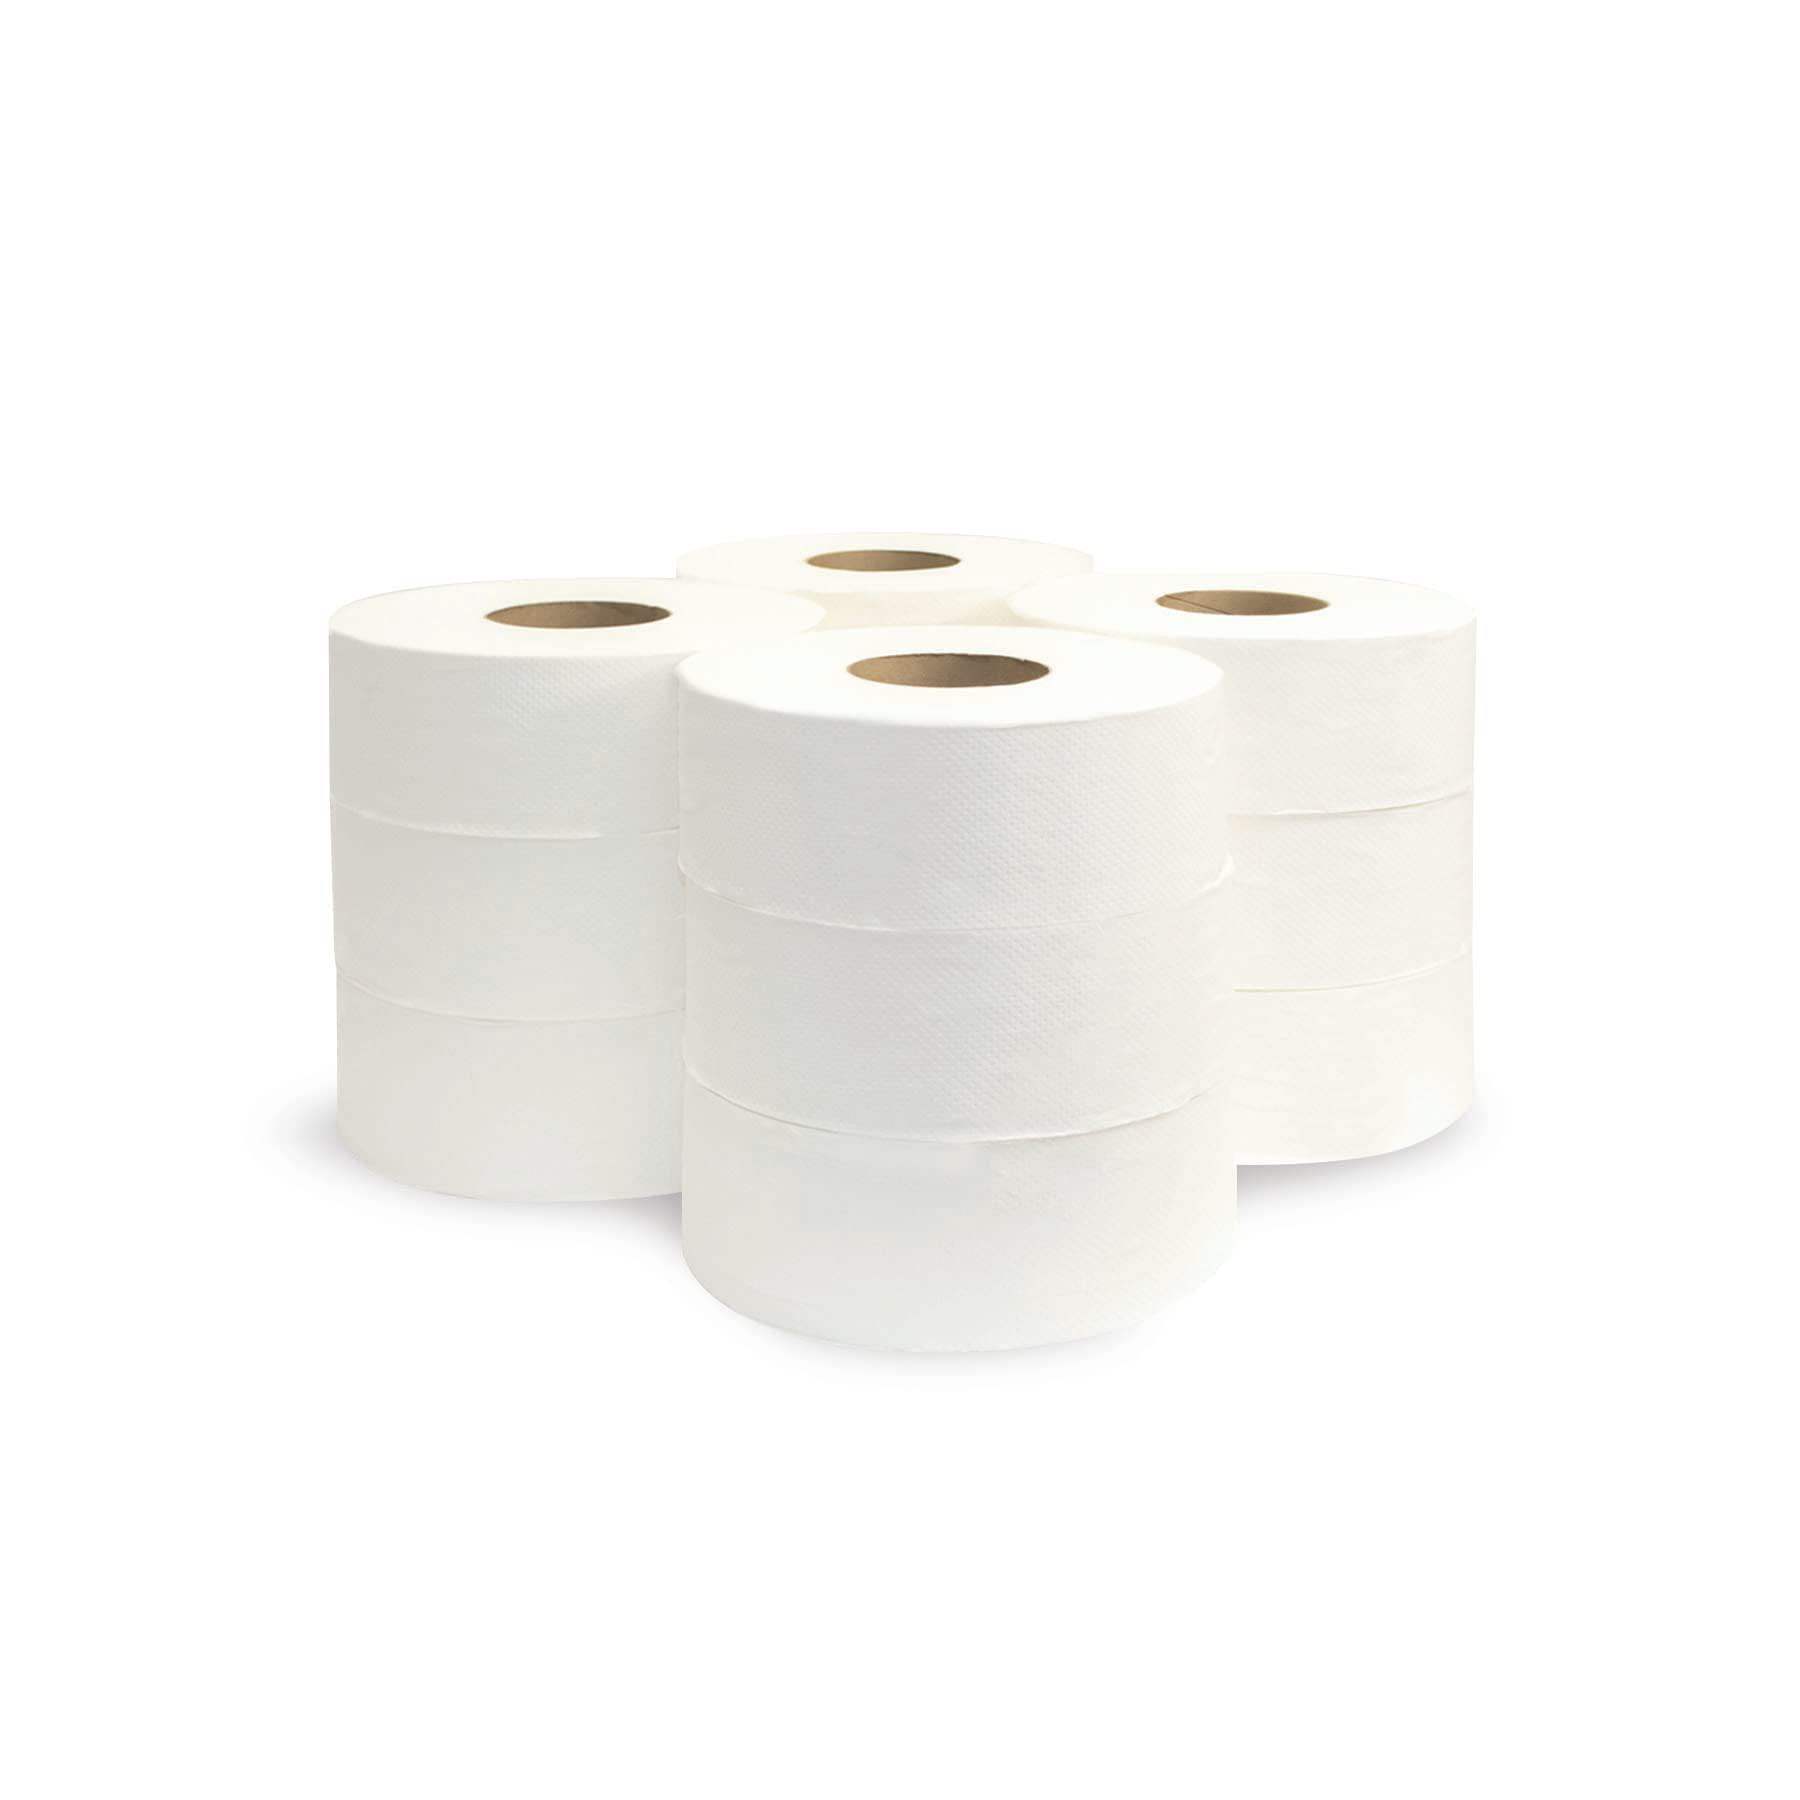 Morcon Paper 29 Millennium Bath Tissue, 2-Ply, White